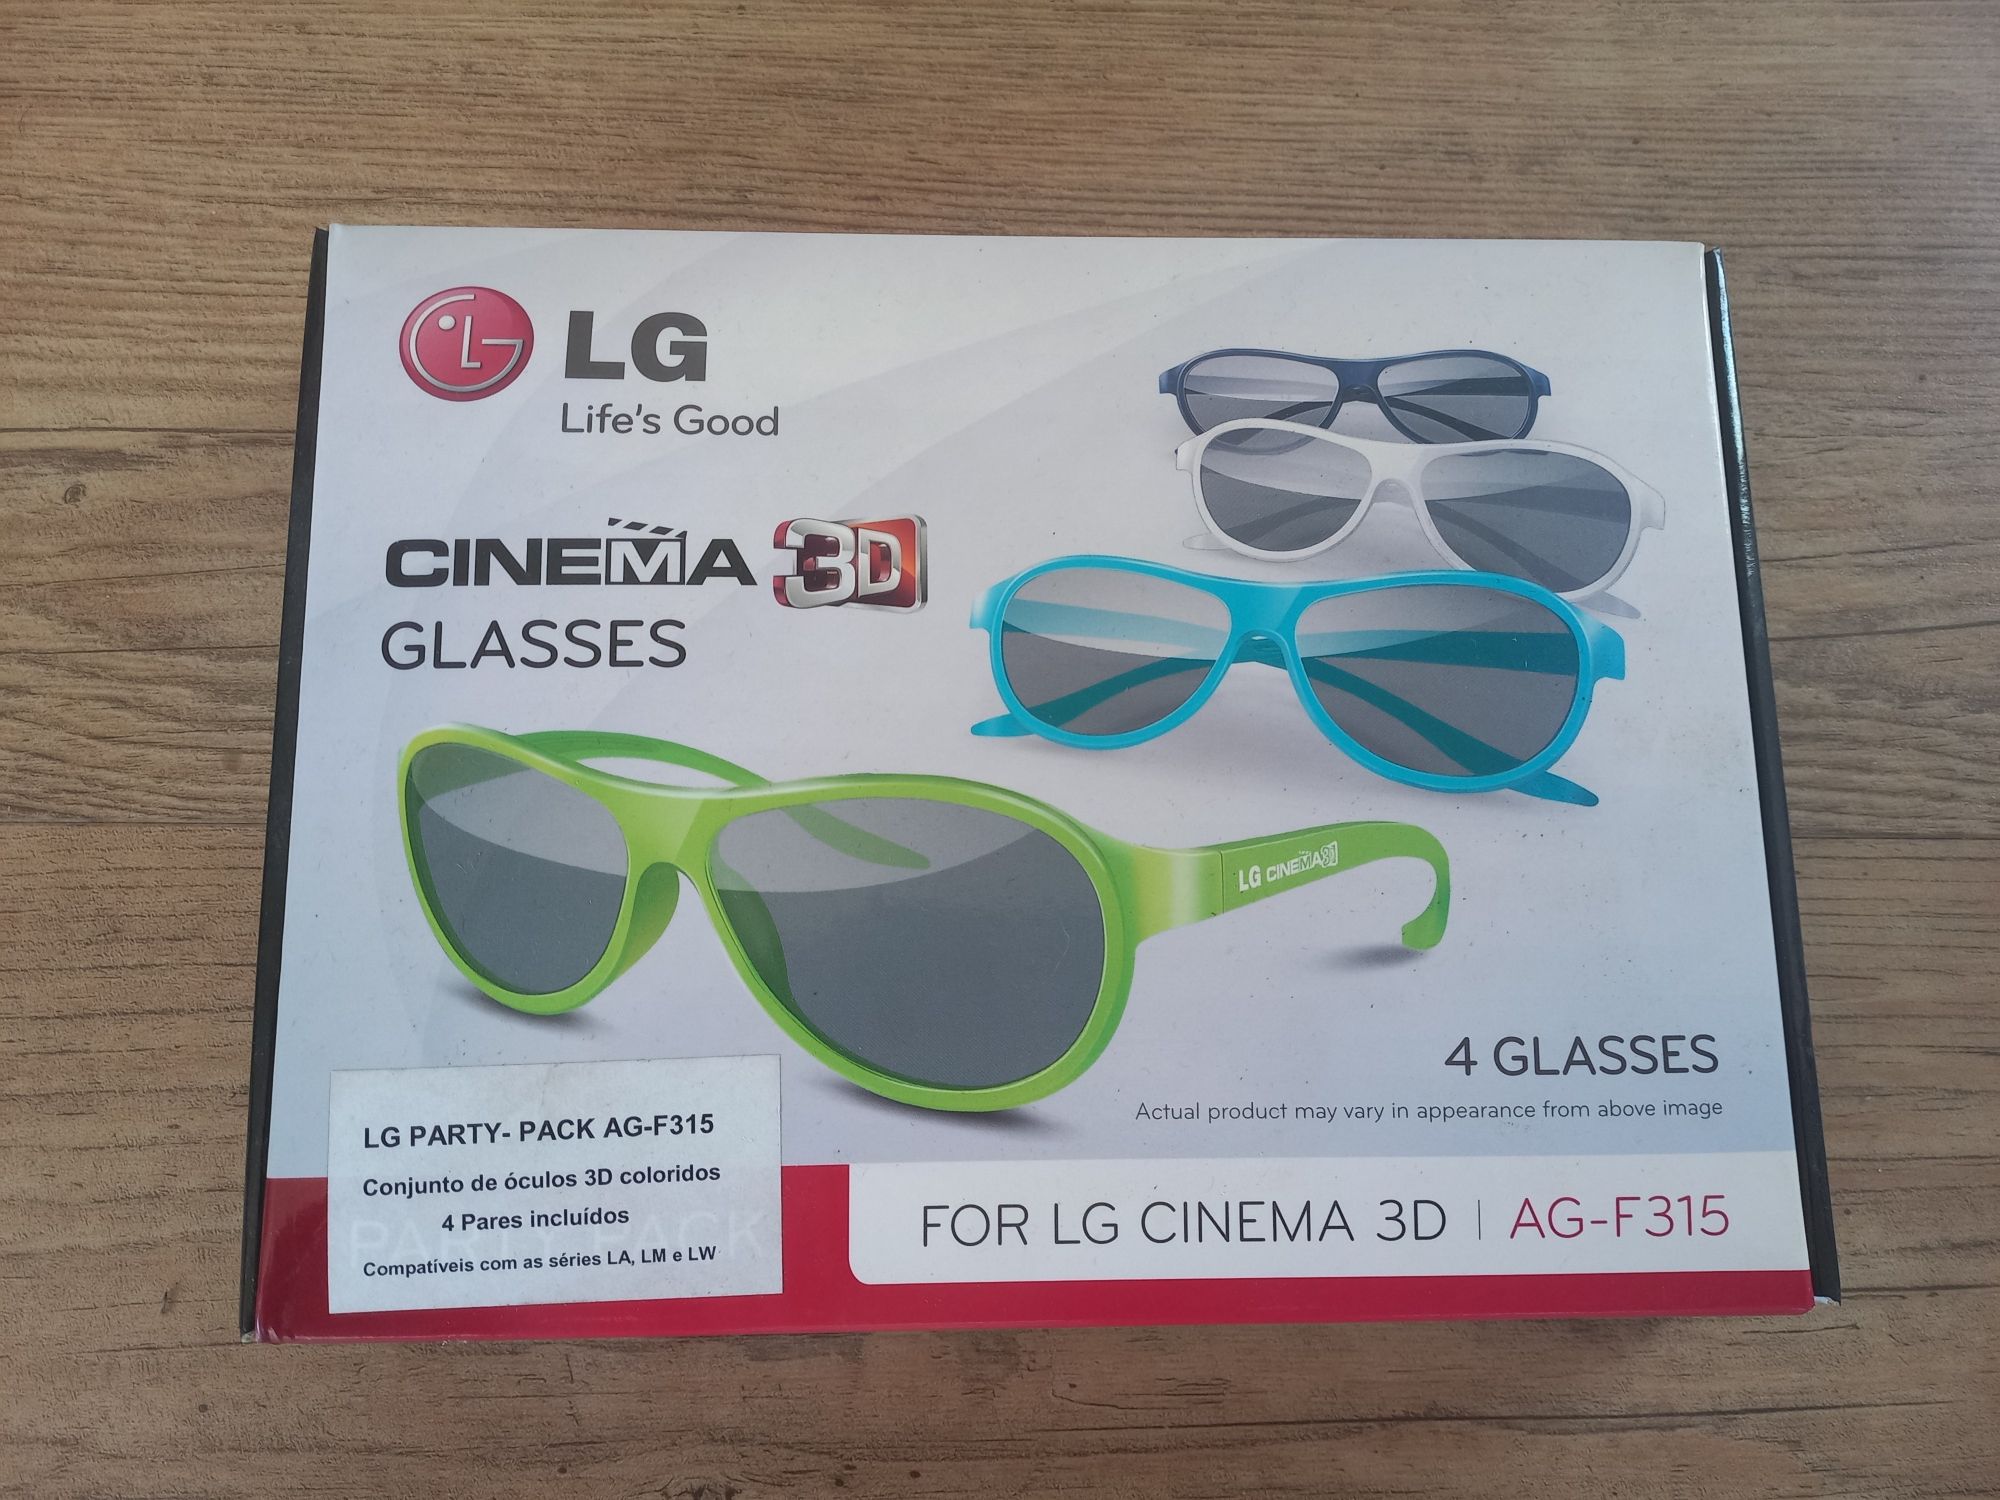 Oculos 3D LG Glasses AG-F315 (para LG Cinema 3D)